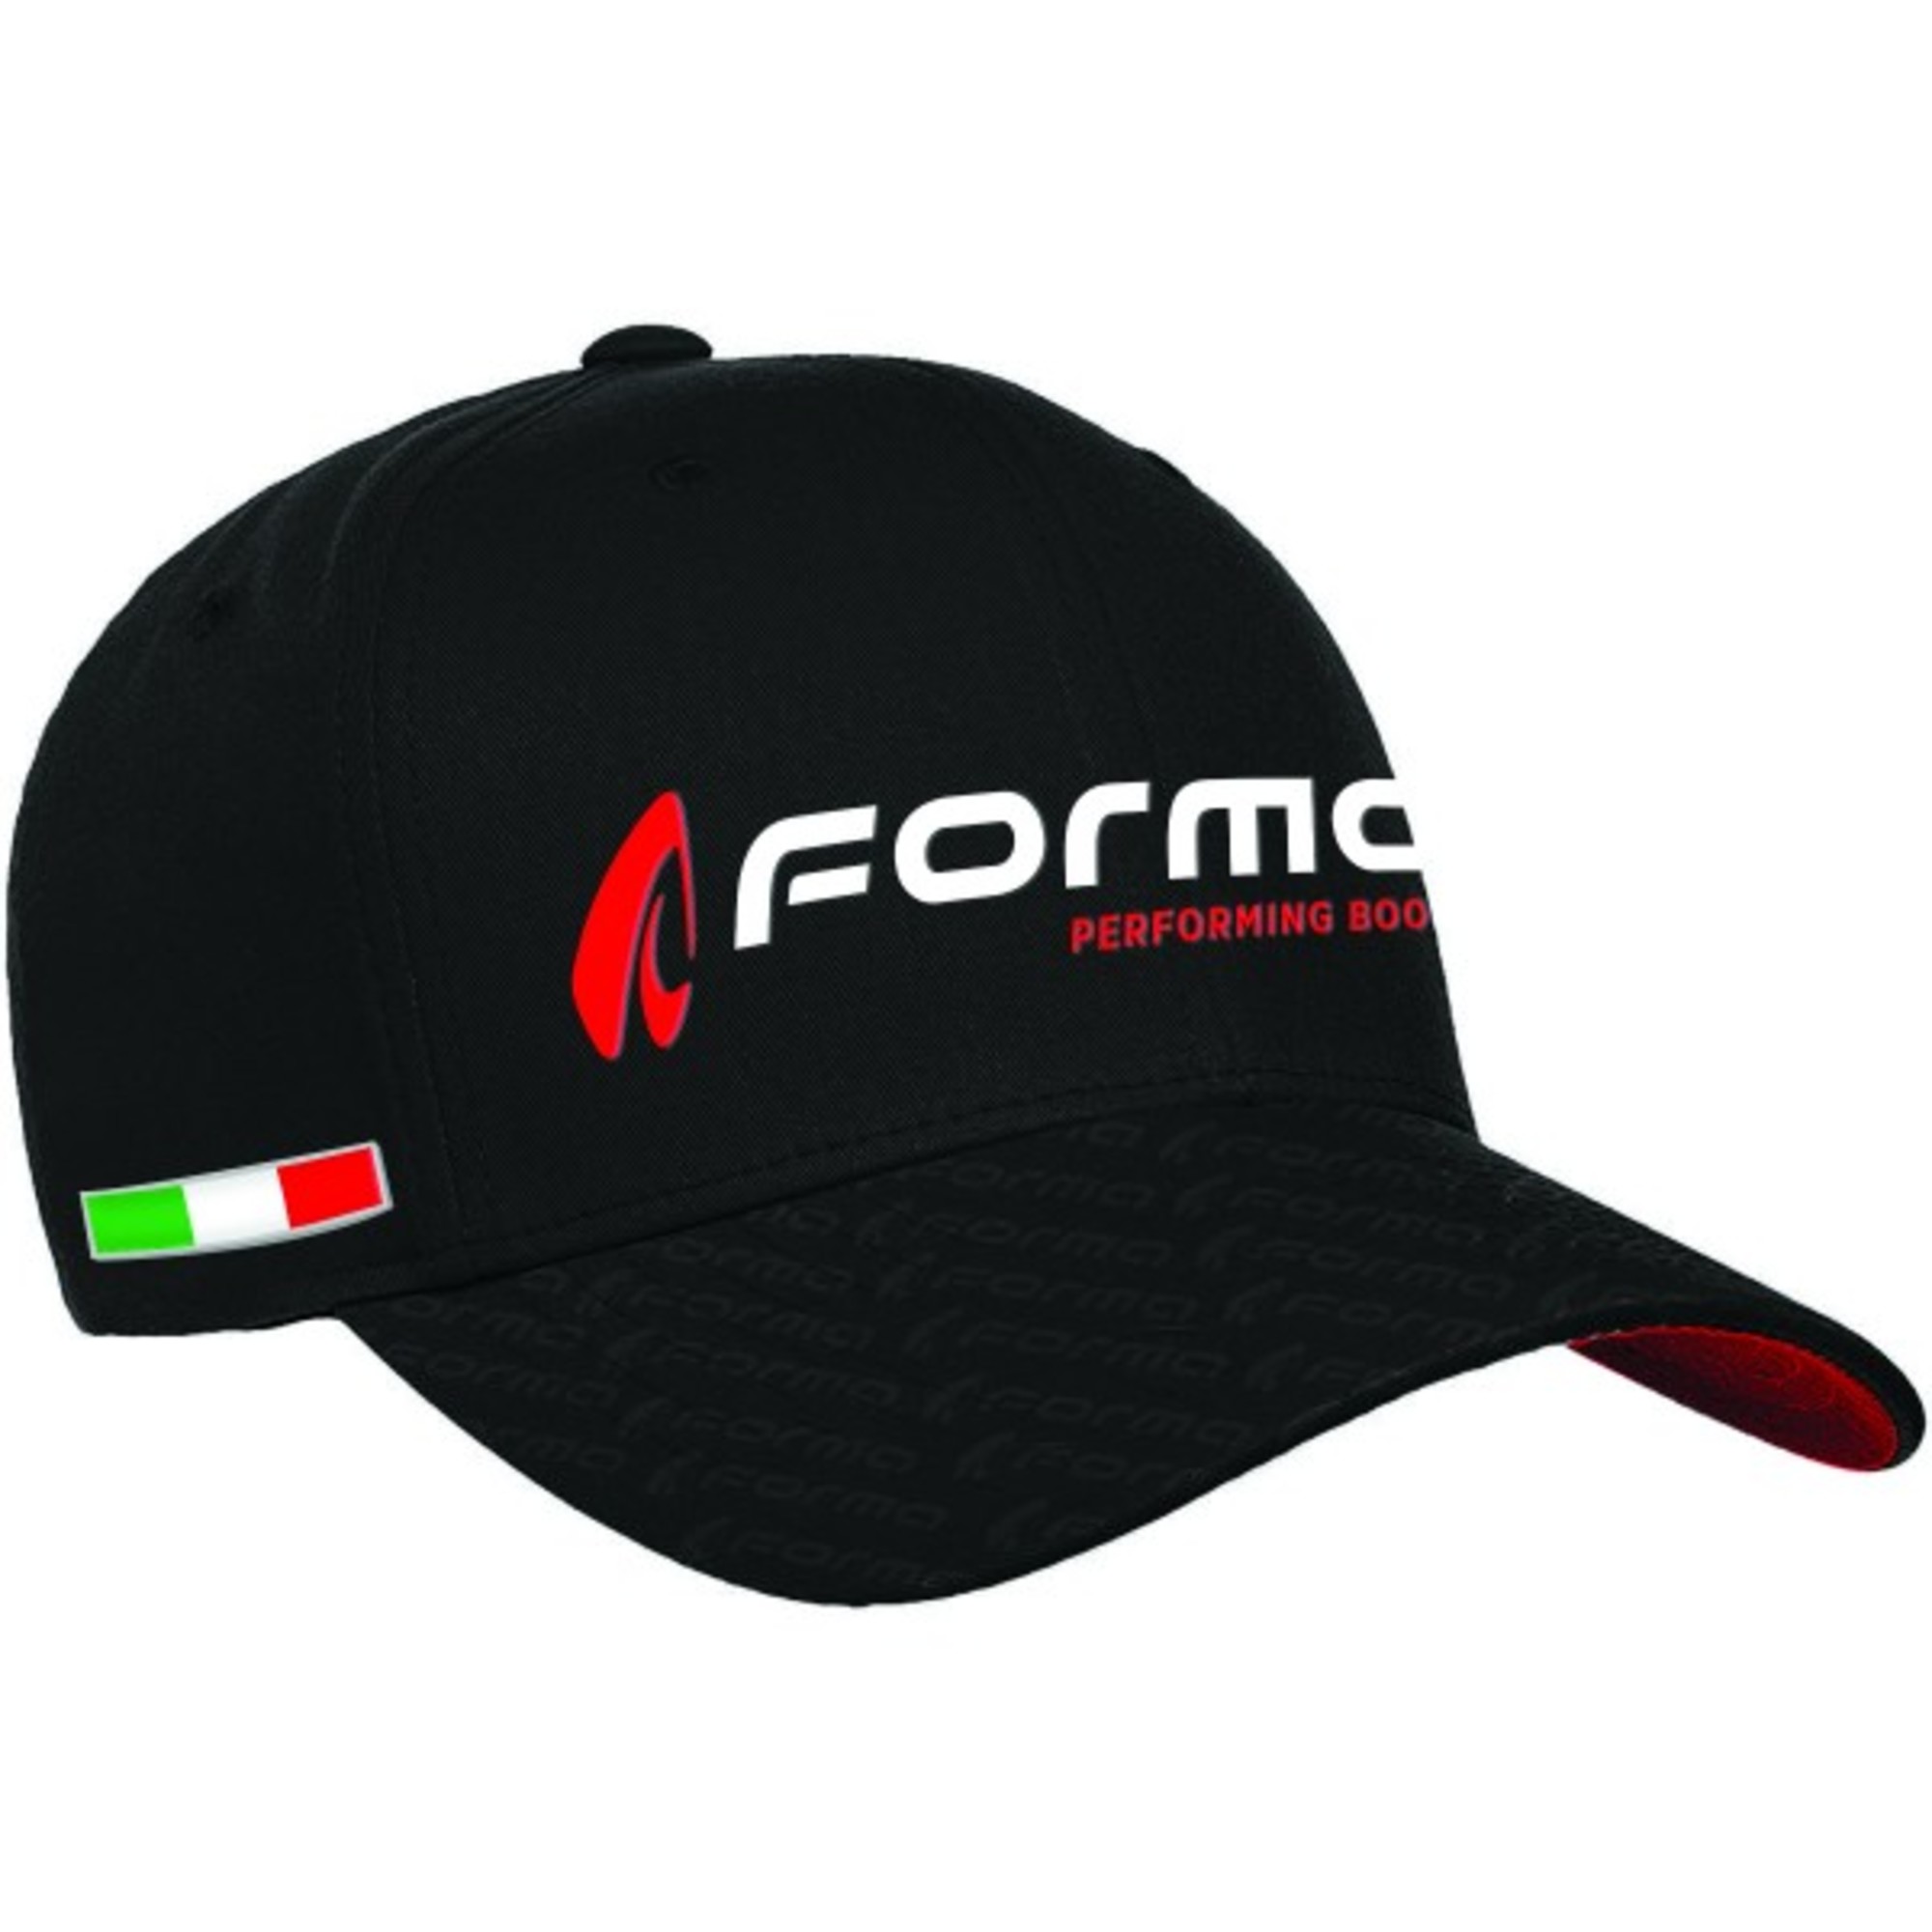 forma flexfit hats adult